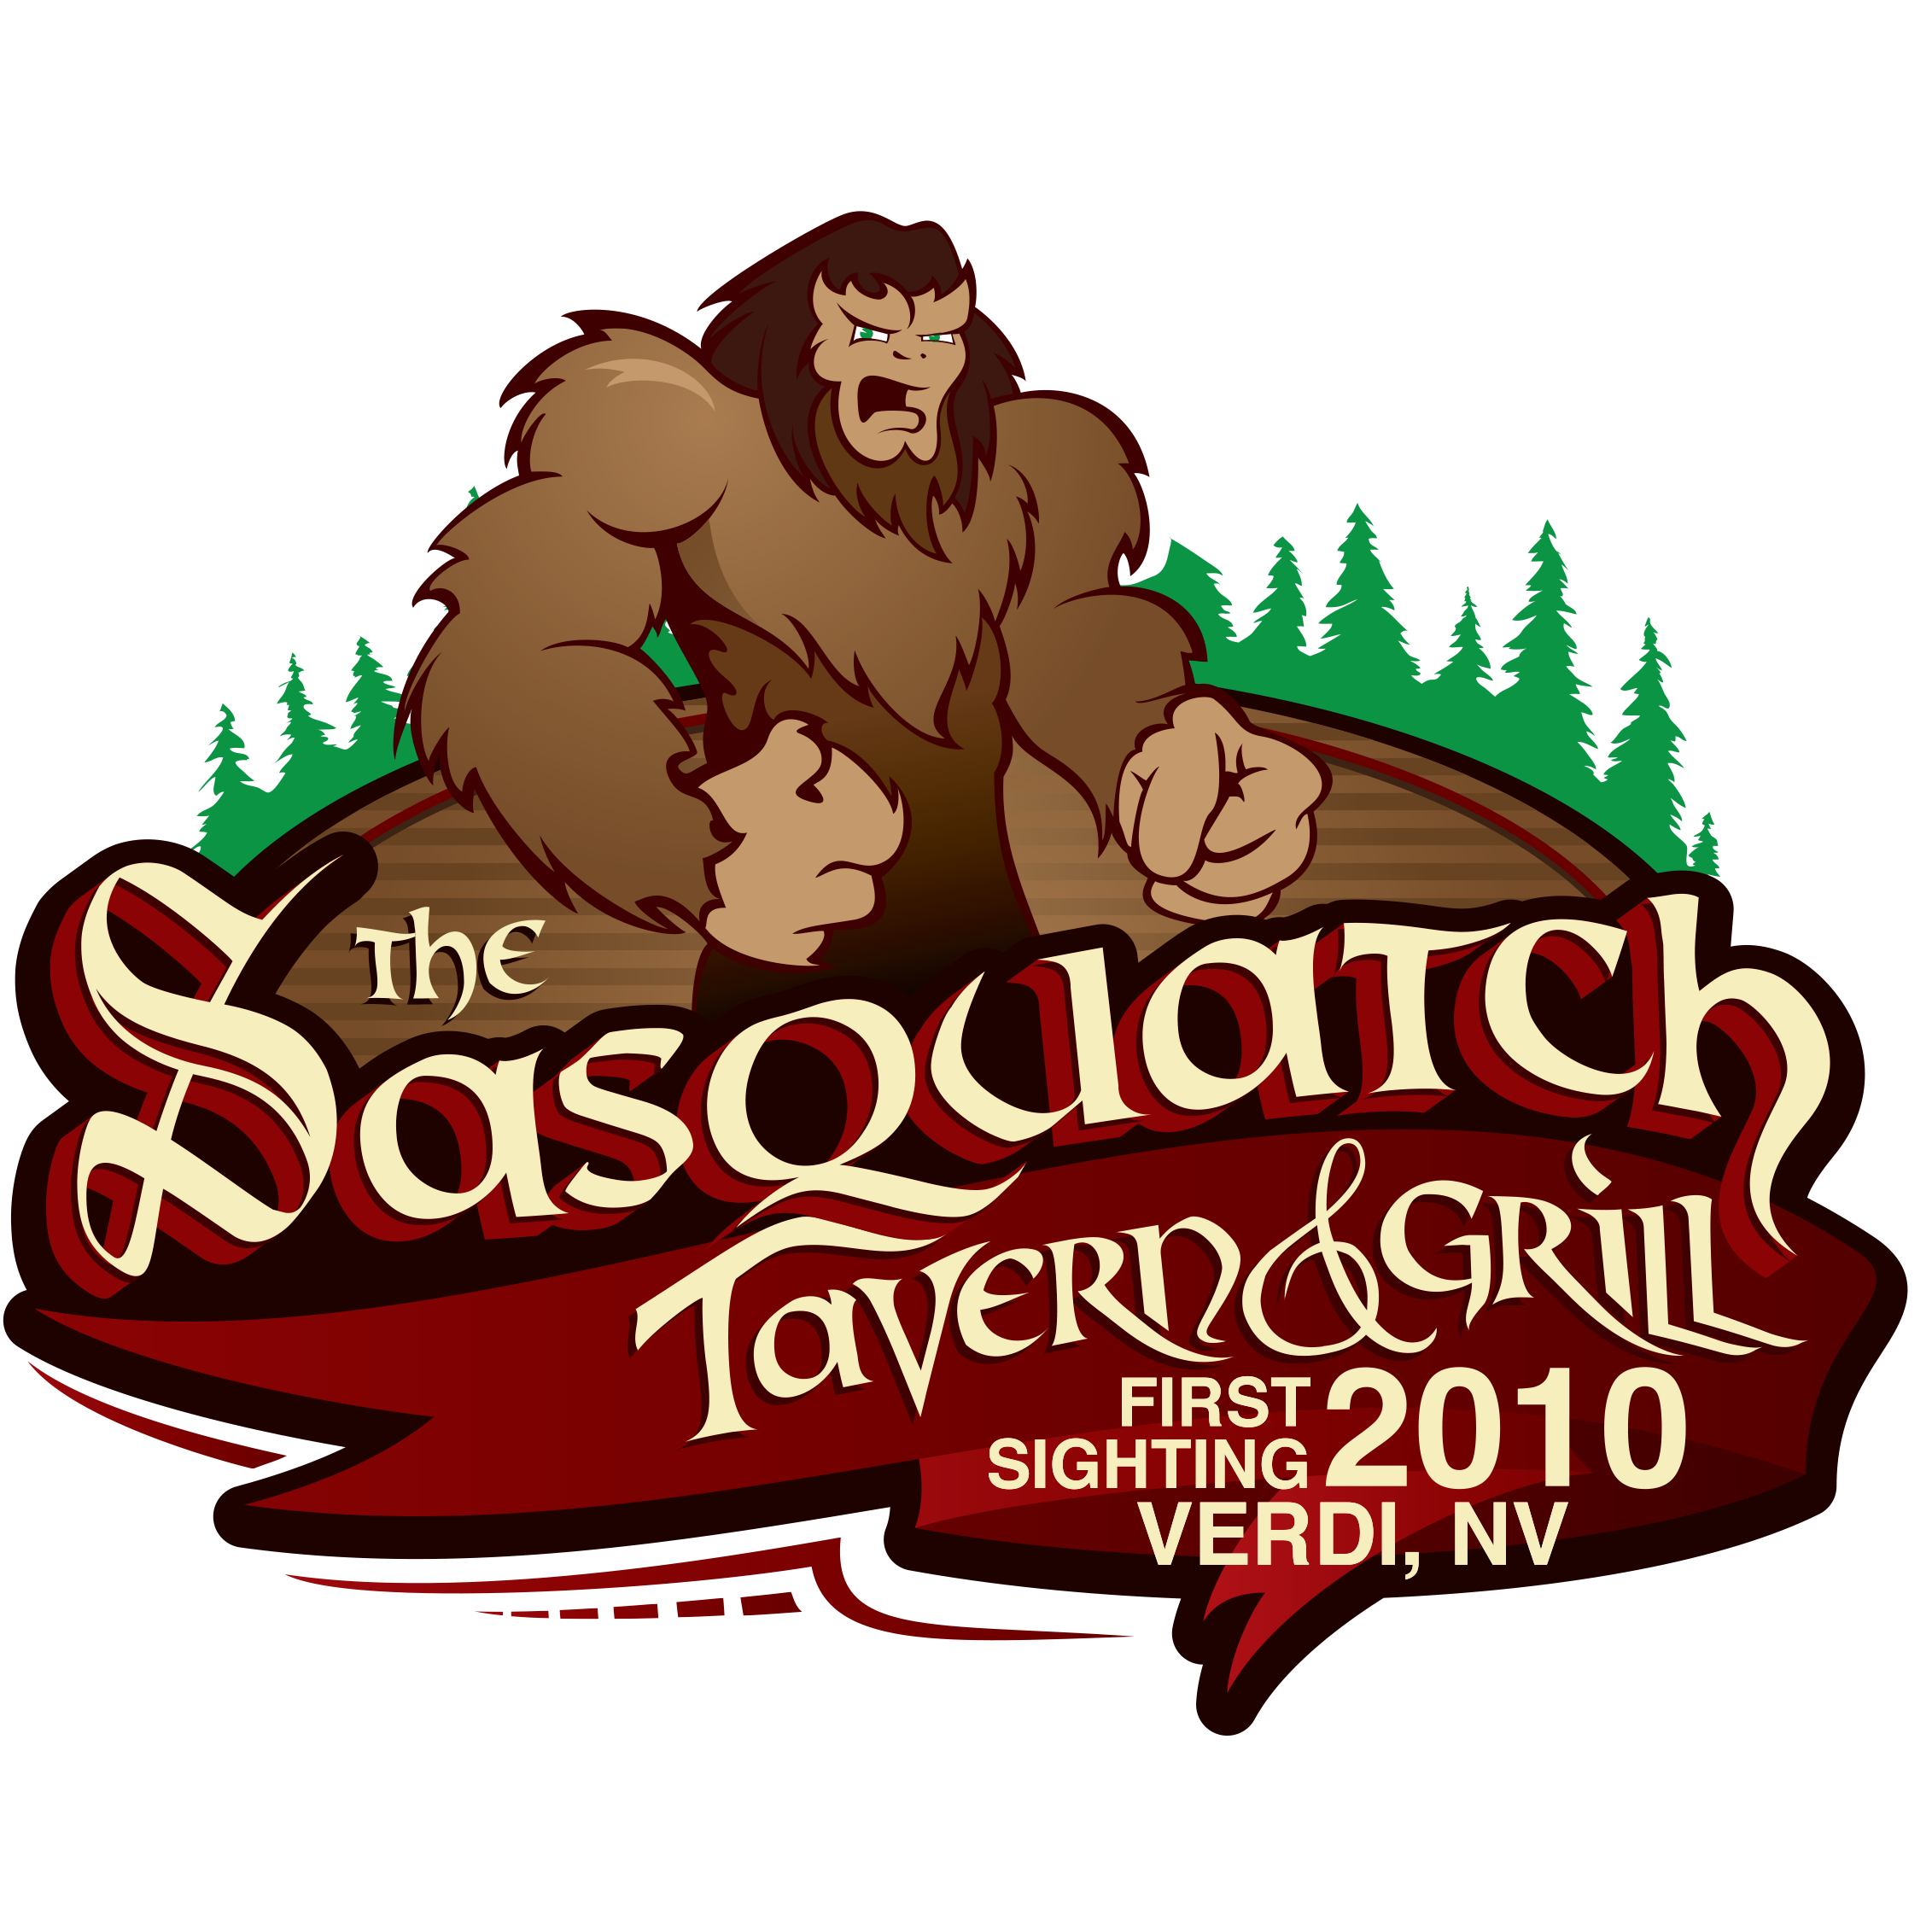 Sasquatch Tavern and Grill - Verdi, NV 89439 - (775)657-9207 | ShowMeLocal.com